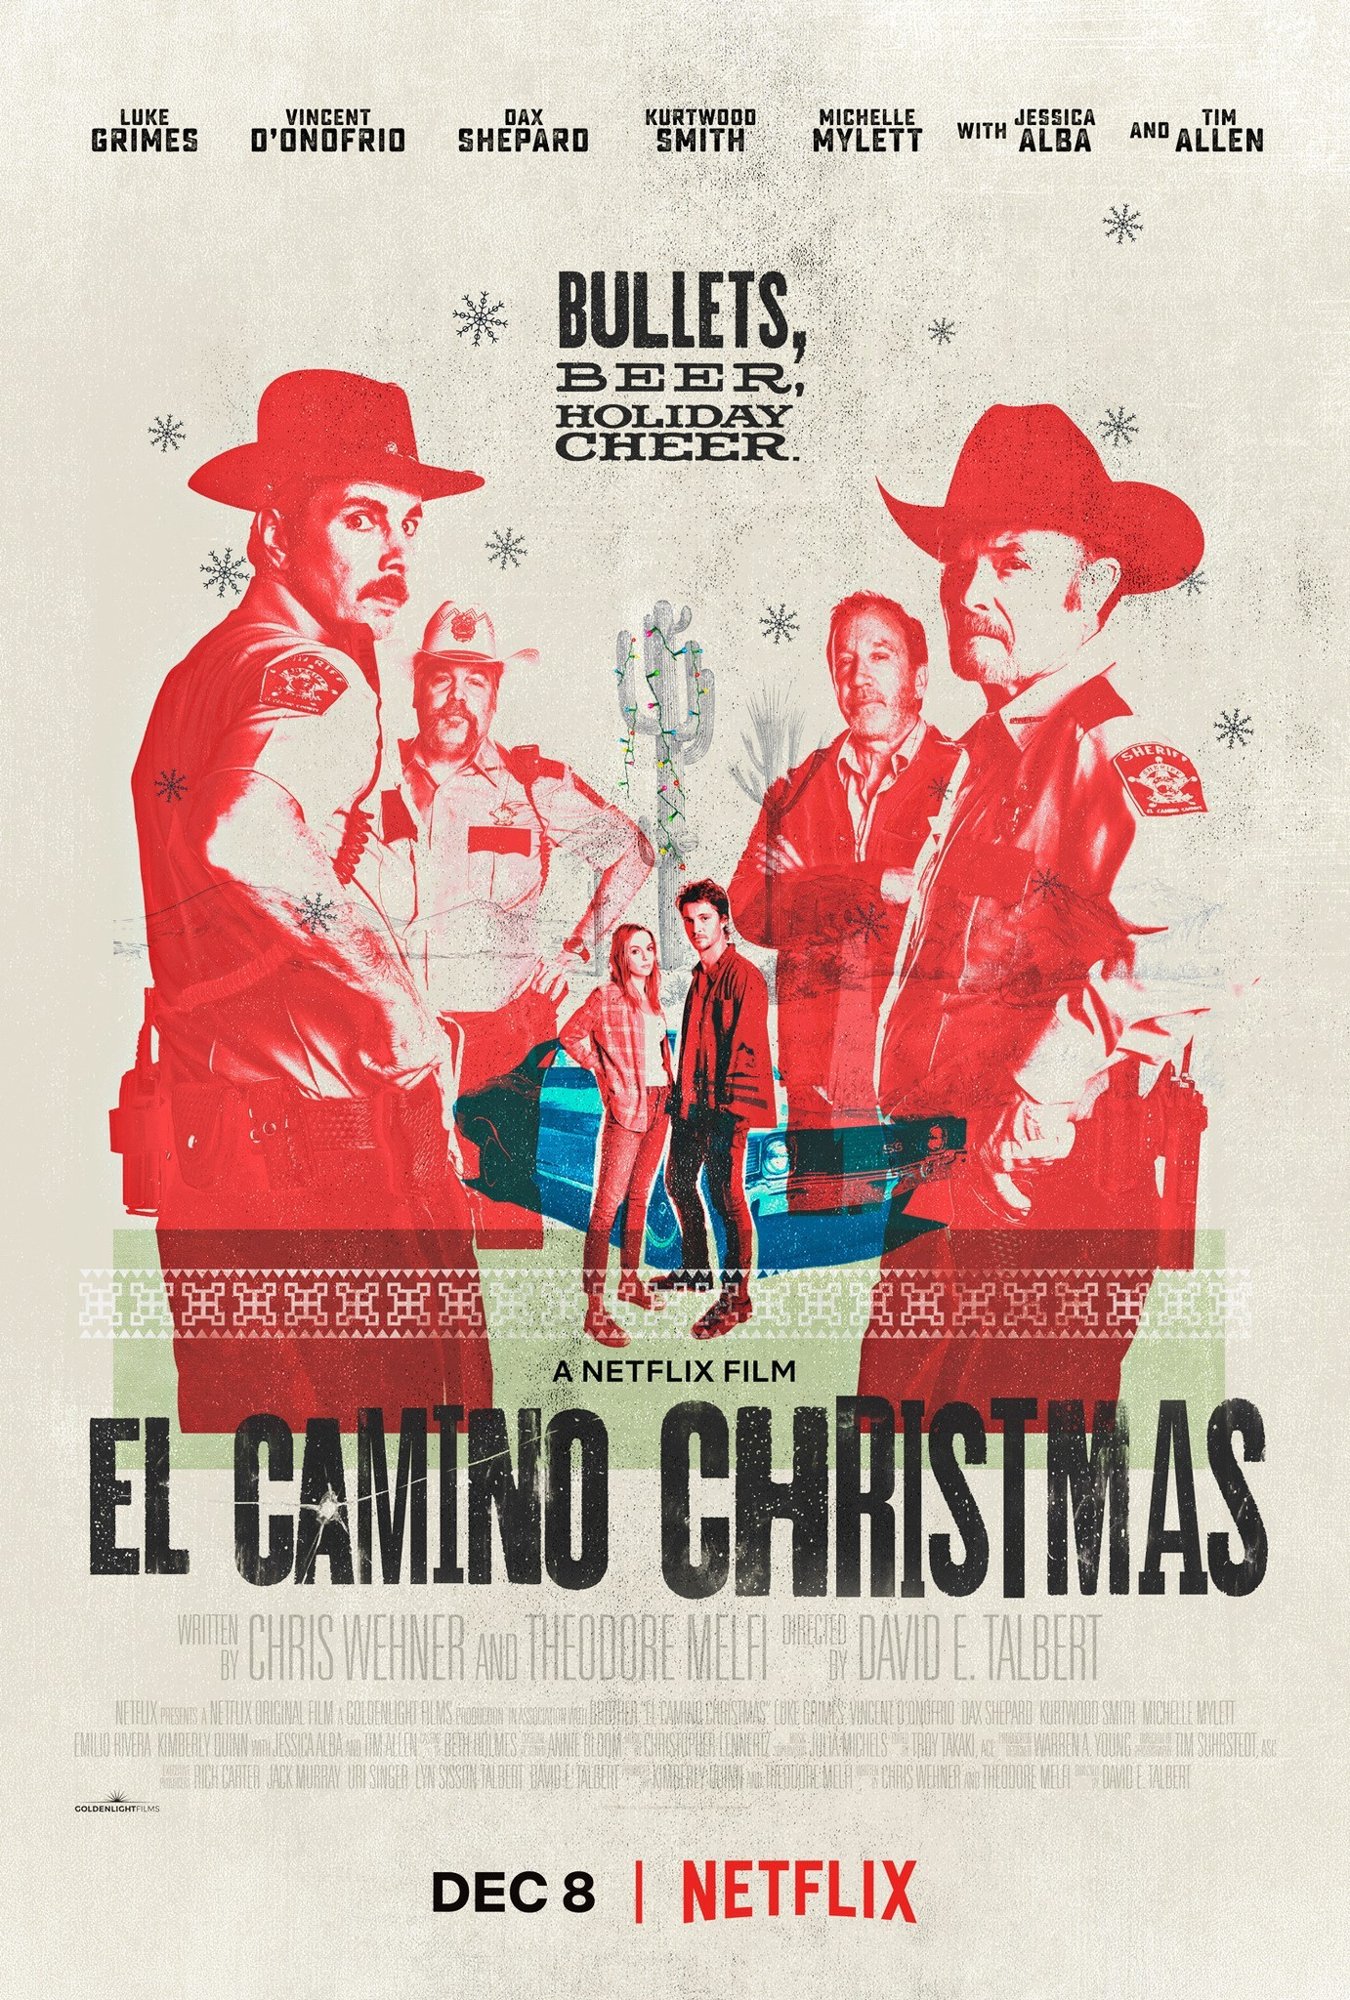 Poster of Netflix's El Camino Christmas (2017)